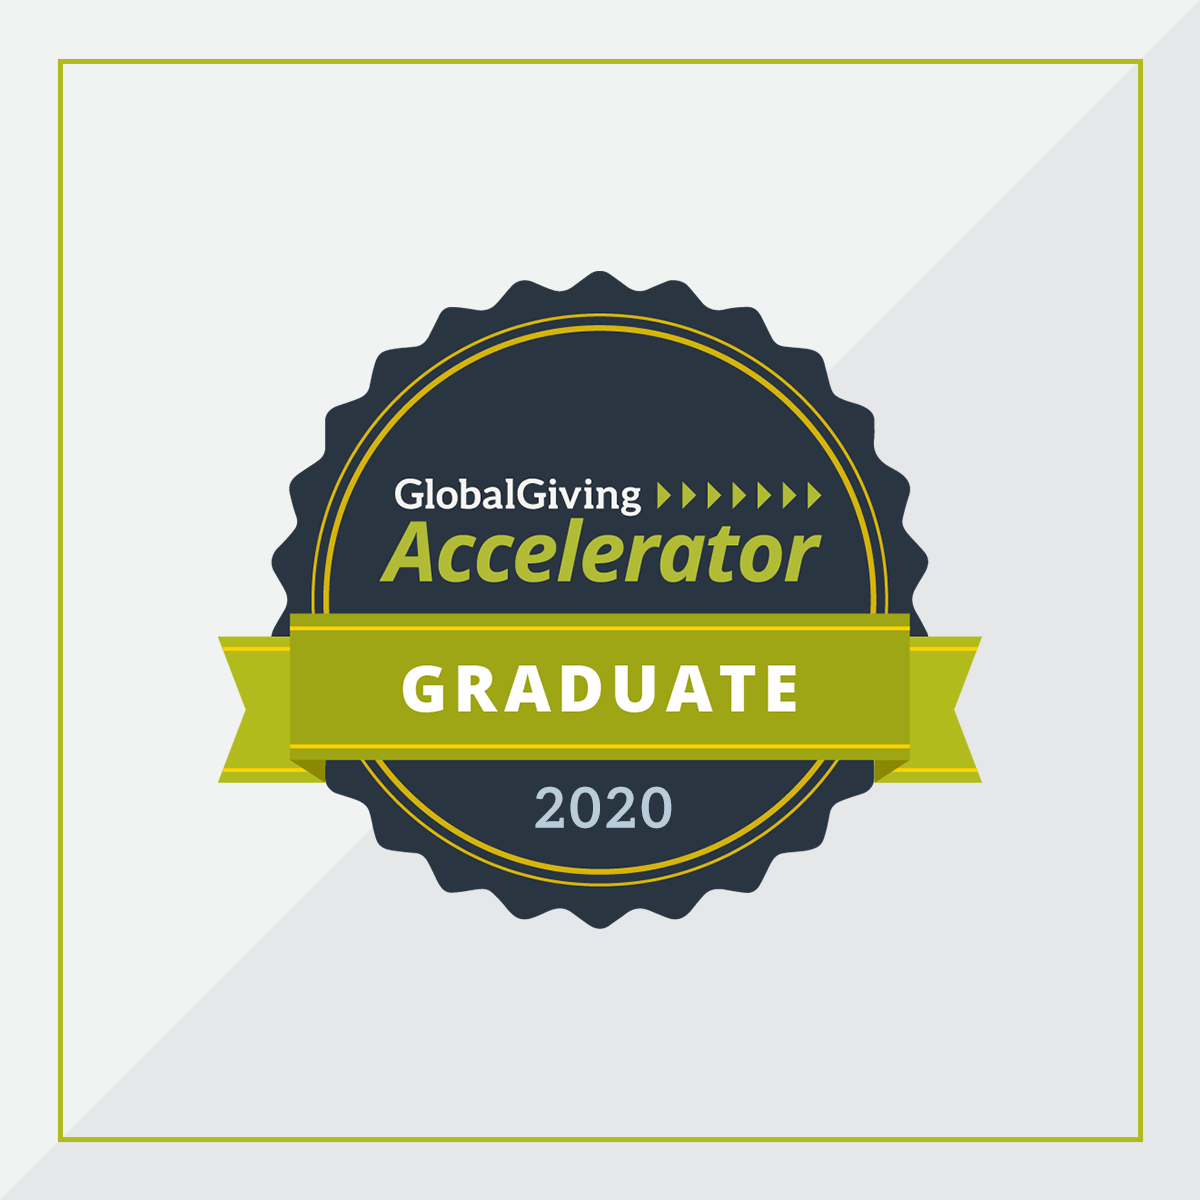 GlobalGiving Accelerator Graduate